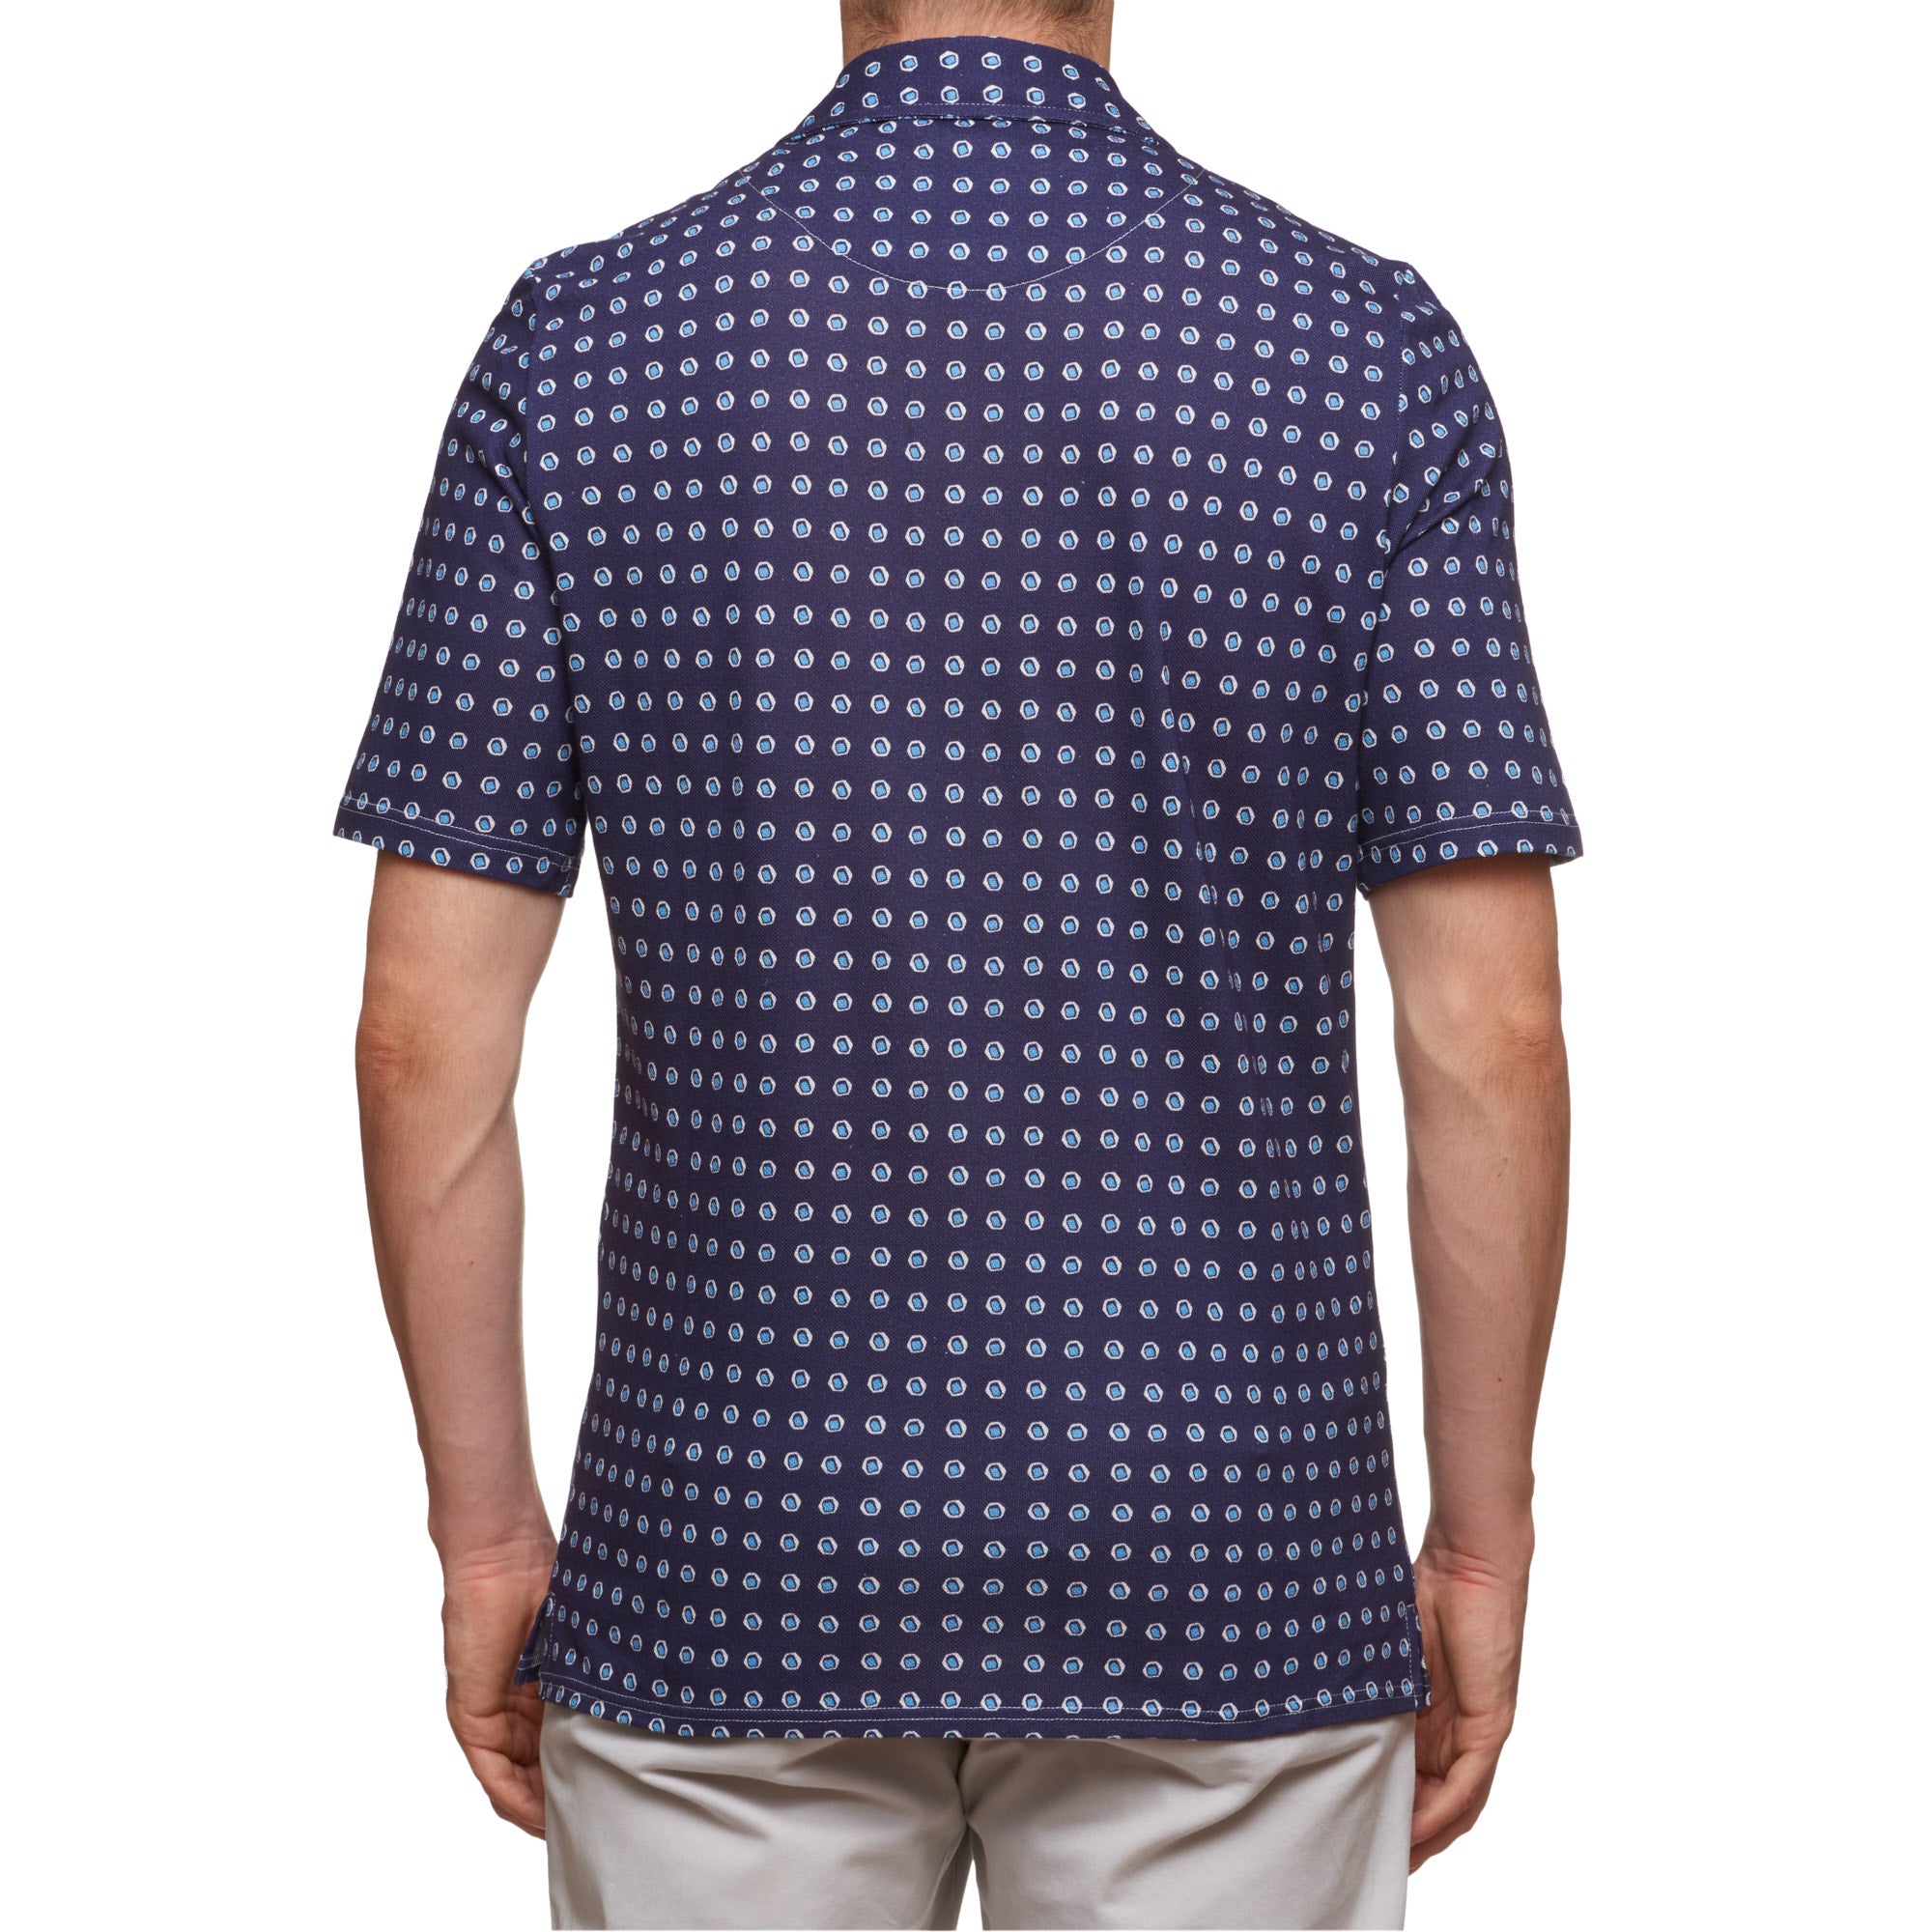 SARTORIO Napoli by KITON Navy Blue Spotted Cotton Pique Short Sleeve Polo Shirt NEW SARTORIO